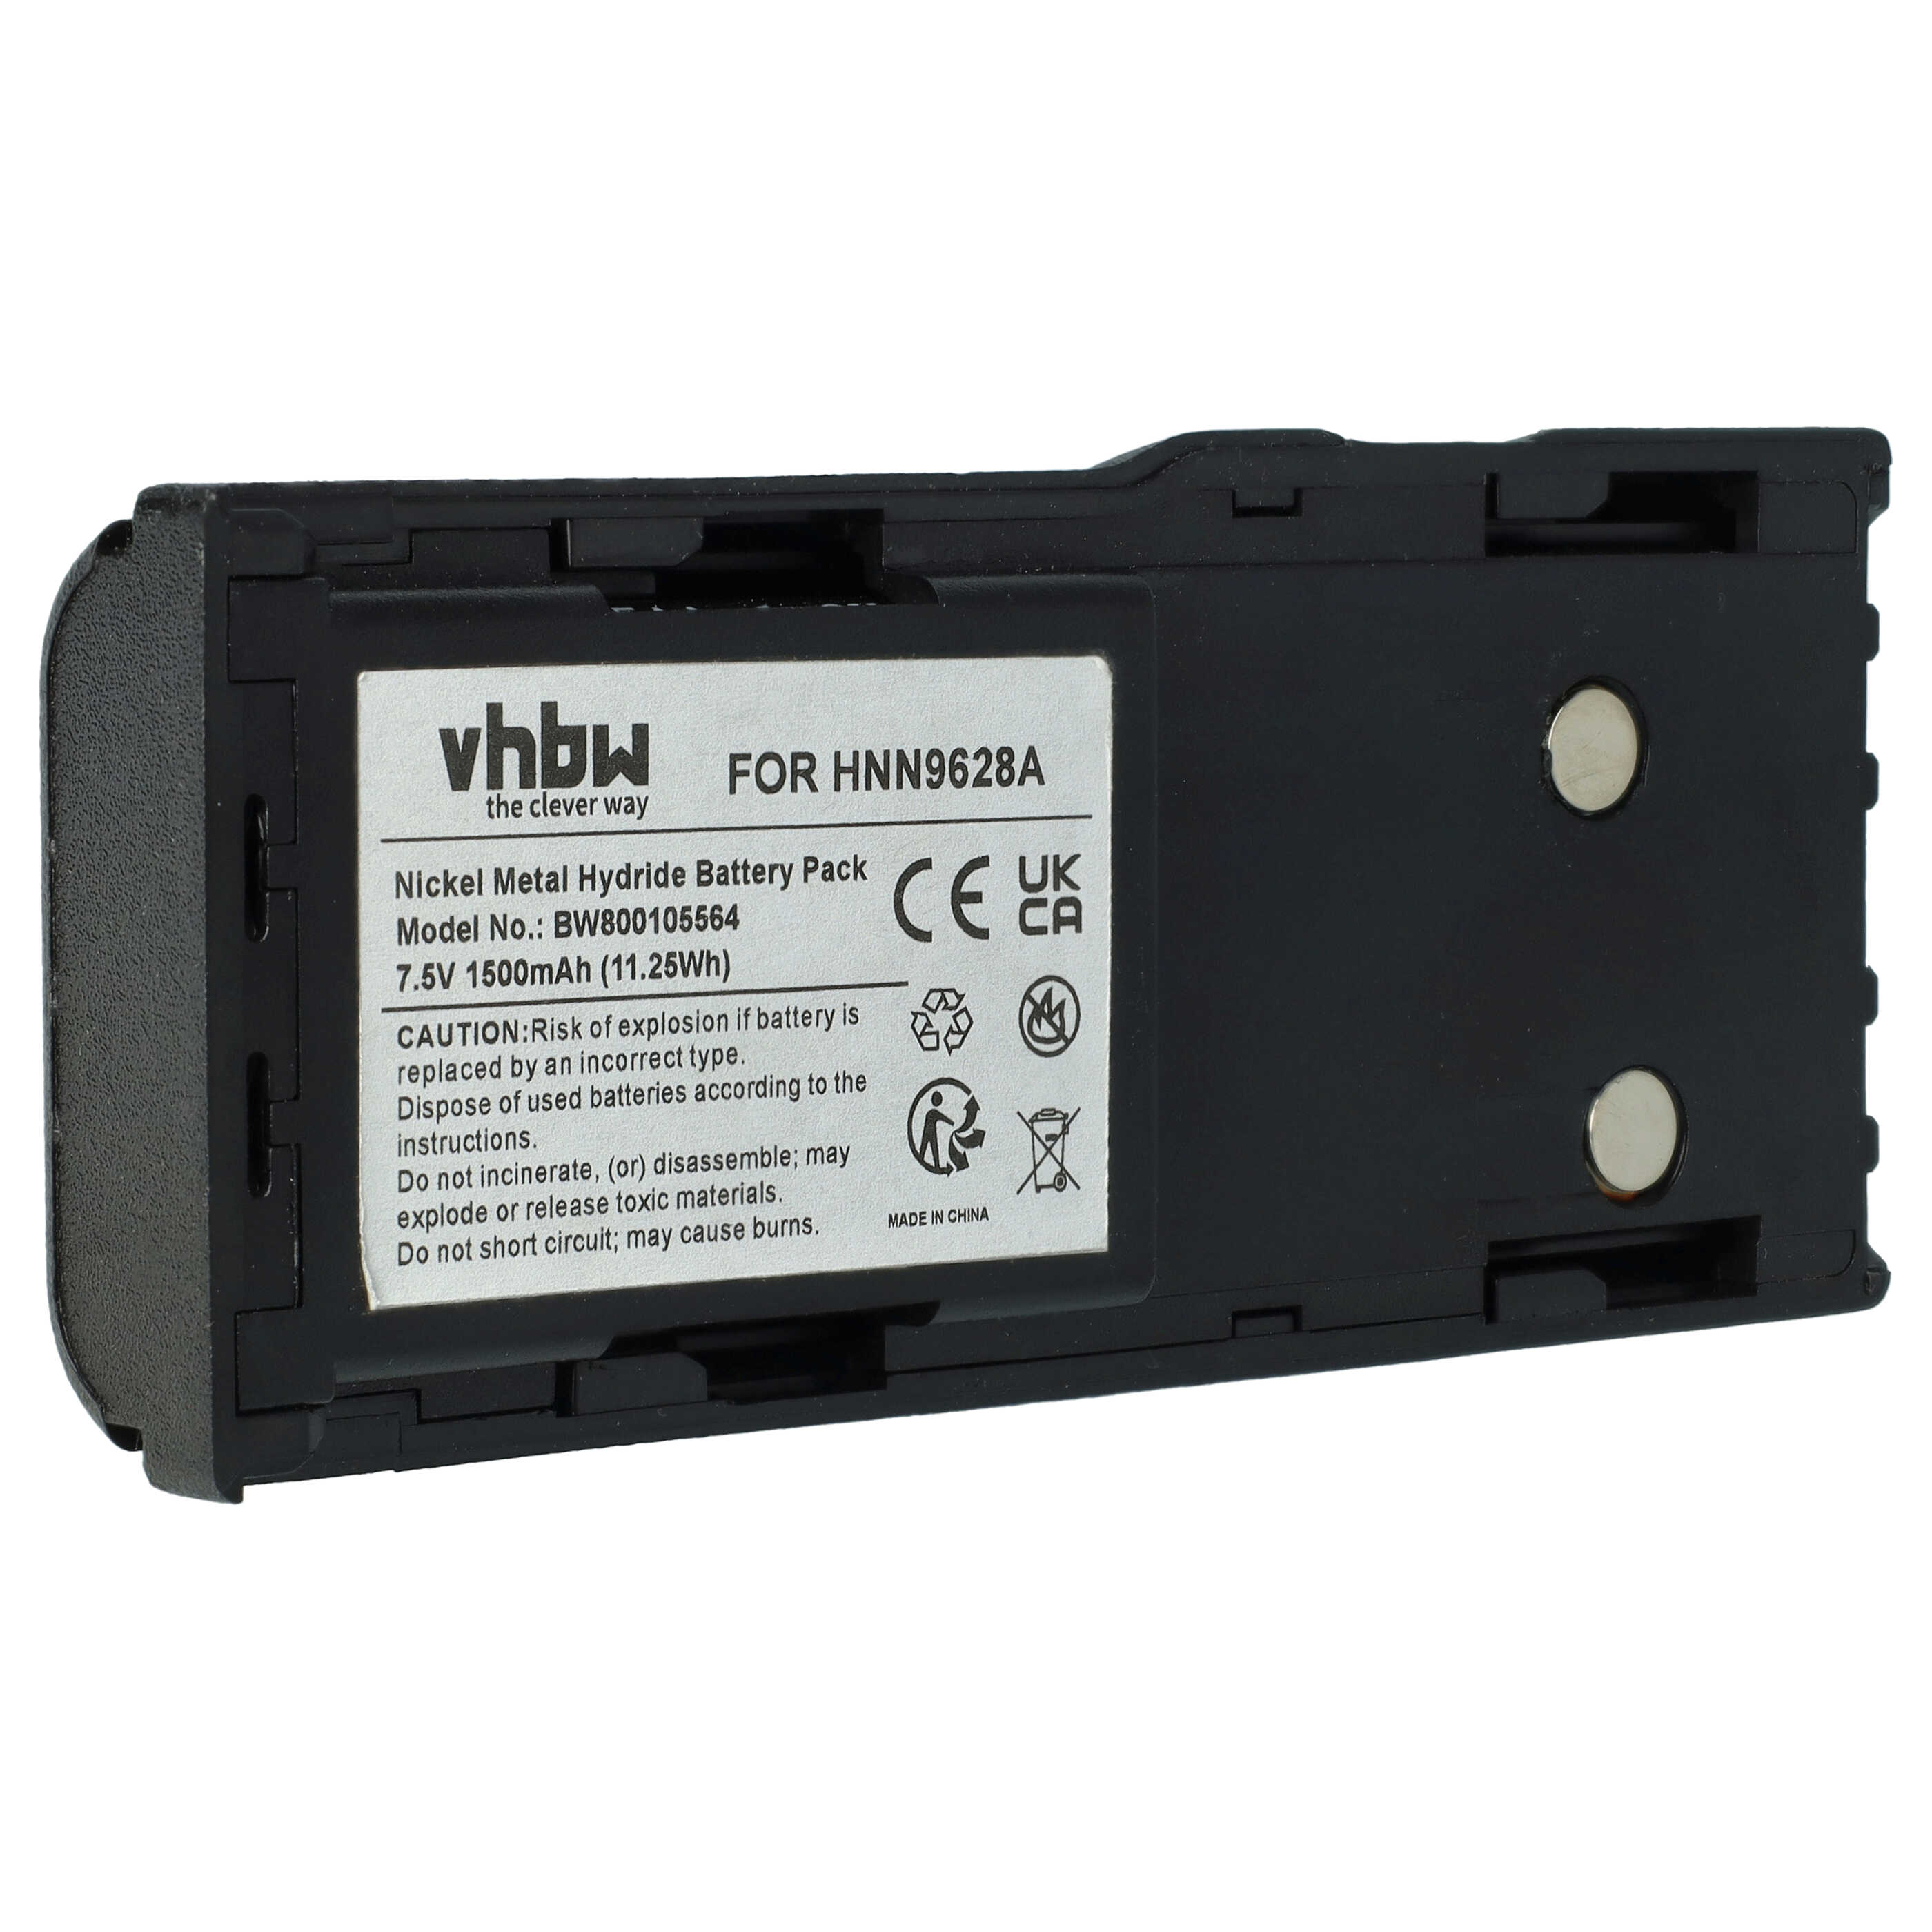 Radio Battery Replacement for Motorola HNN8133C, HNN9628A, HNN8308A, HNN9628 - 1500mAh 7.5V NiMH + Belt Clip